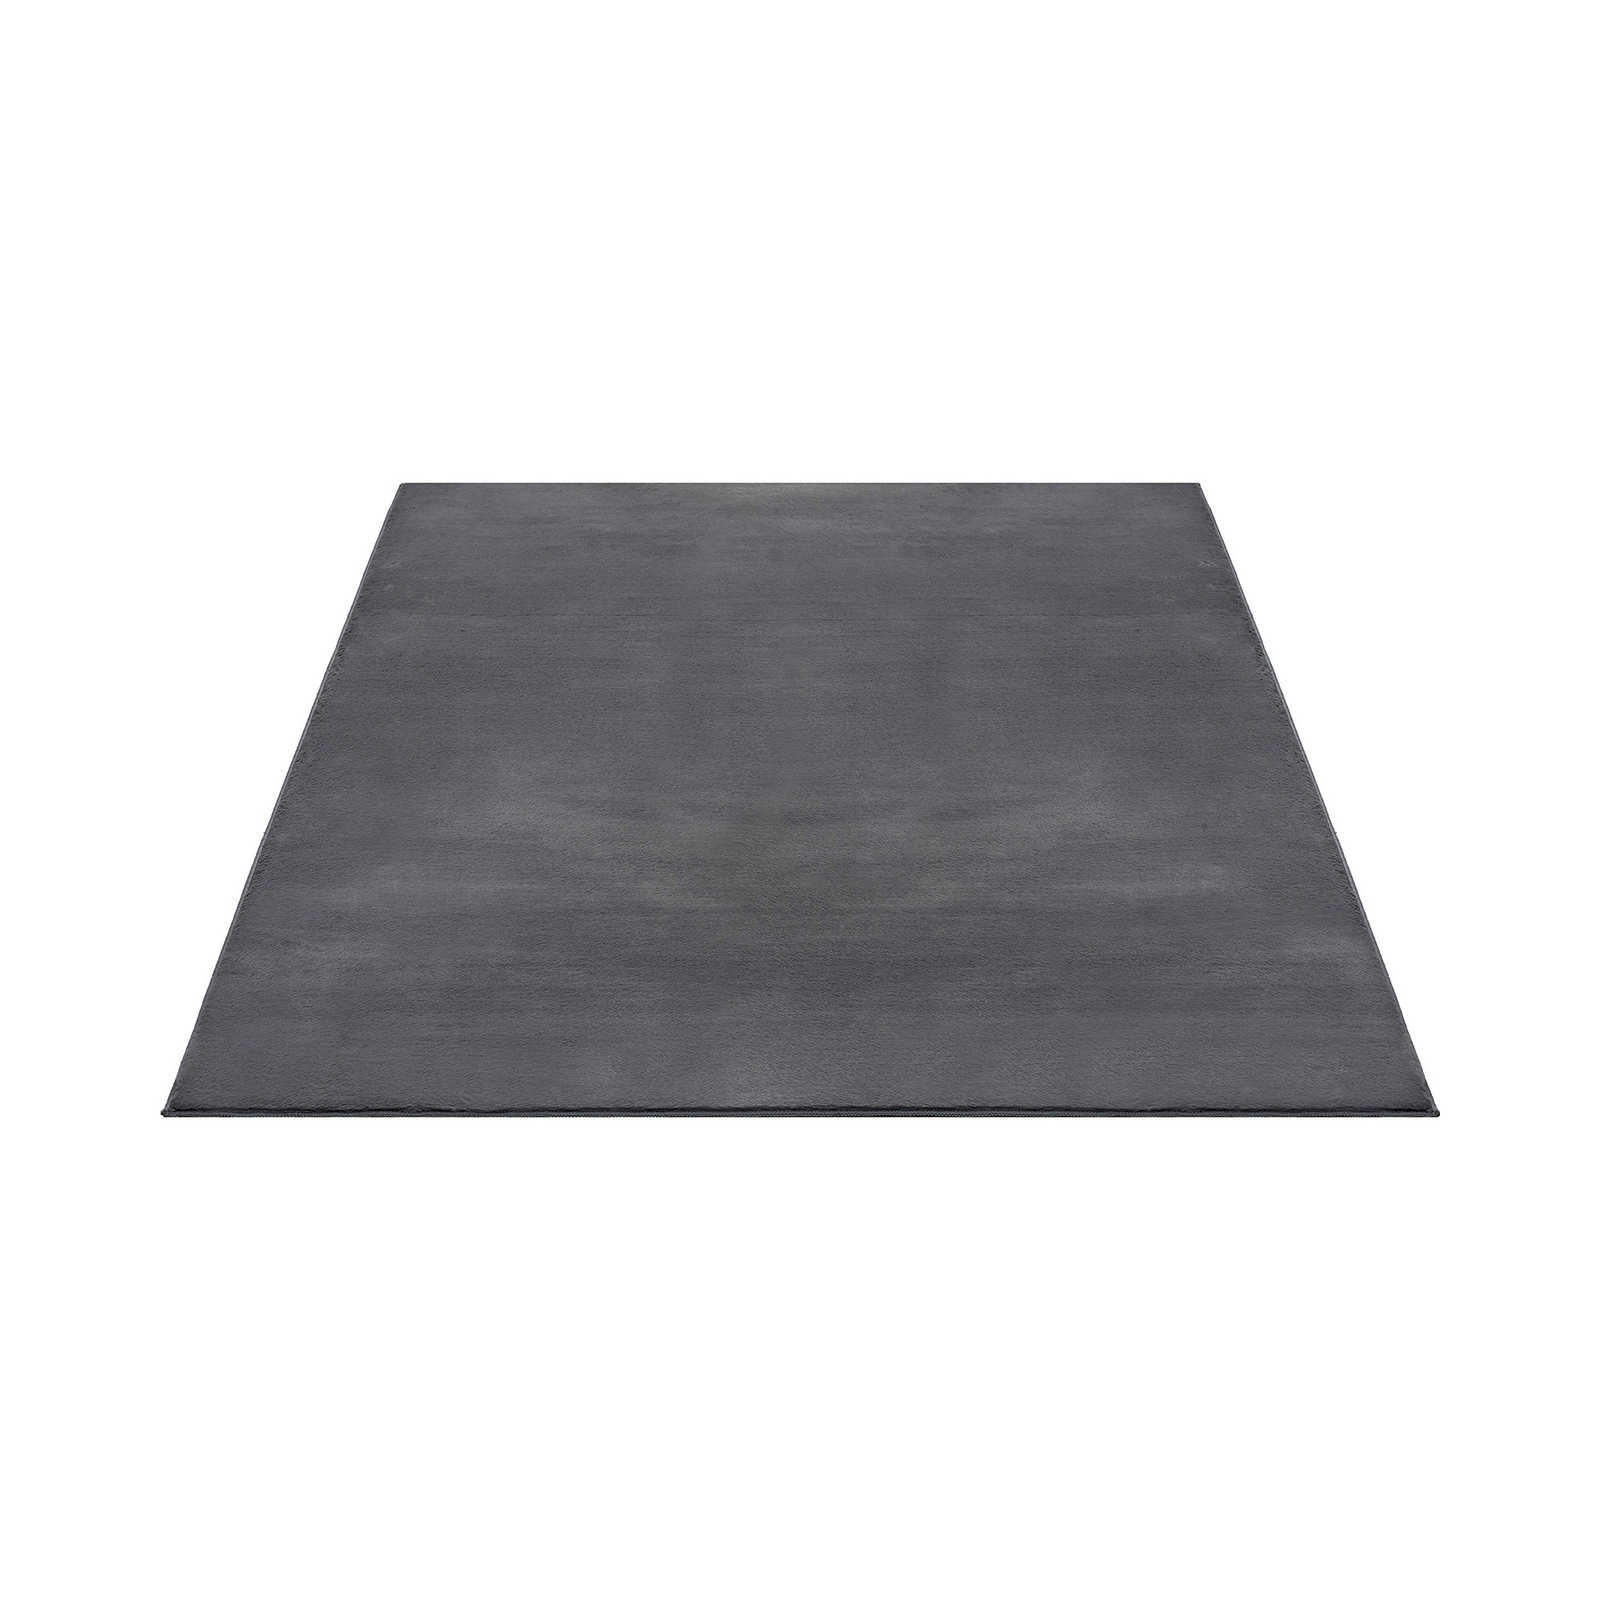 Soft deep pile carpet in anthracite - 280 x 200 cm
